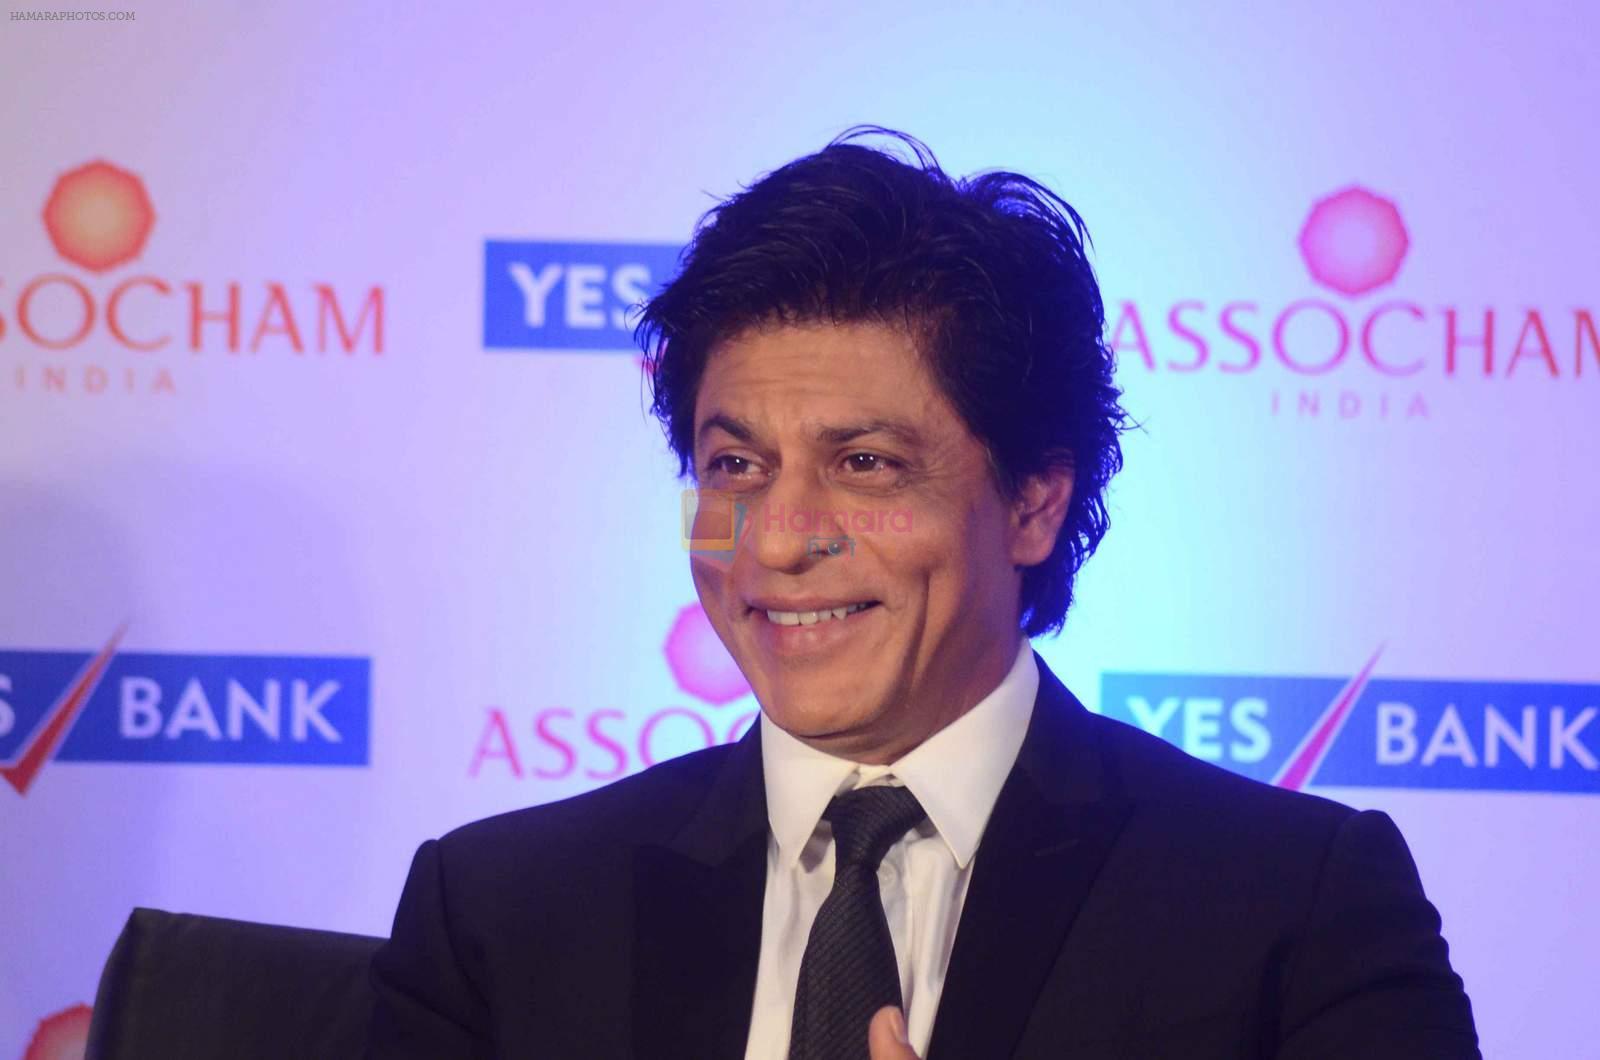 Shahrukh Khan at Yes Bank event on 23rd Nov 2015